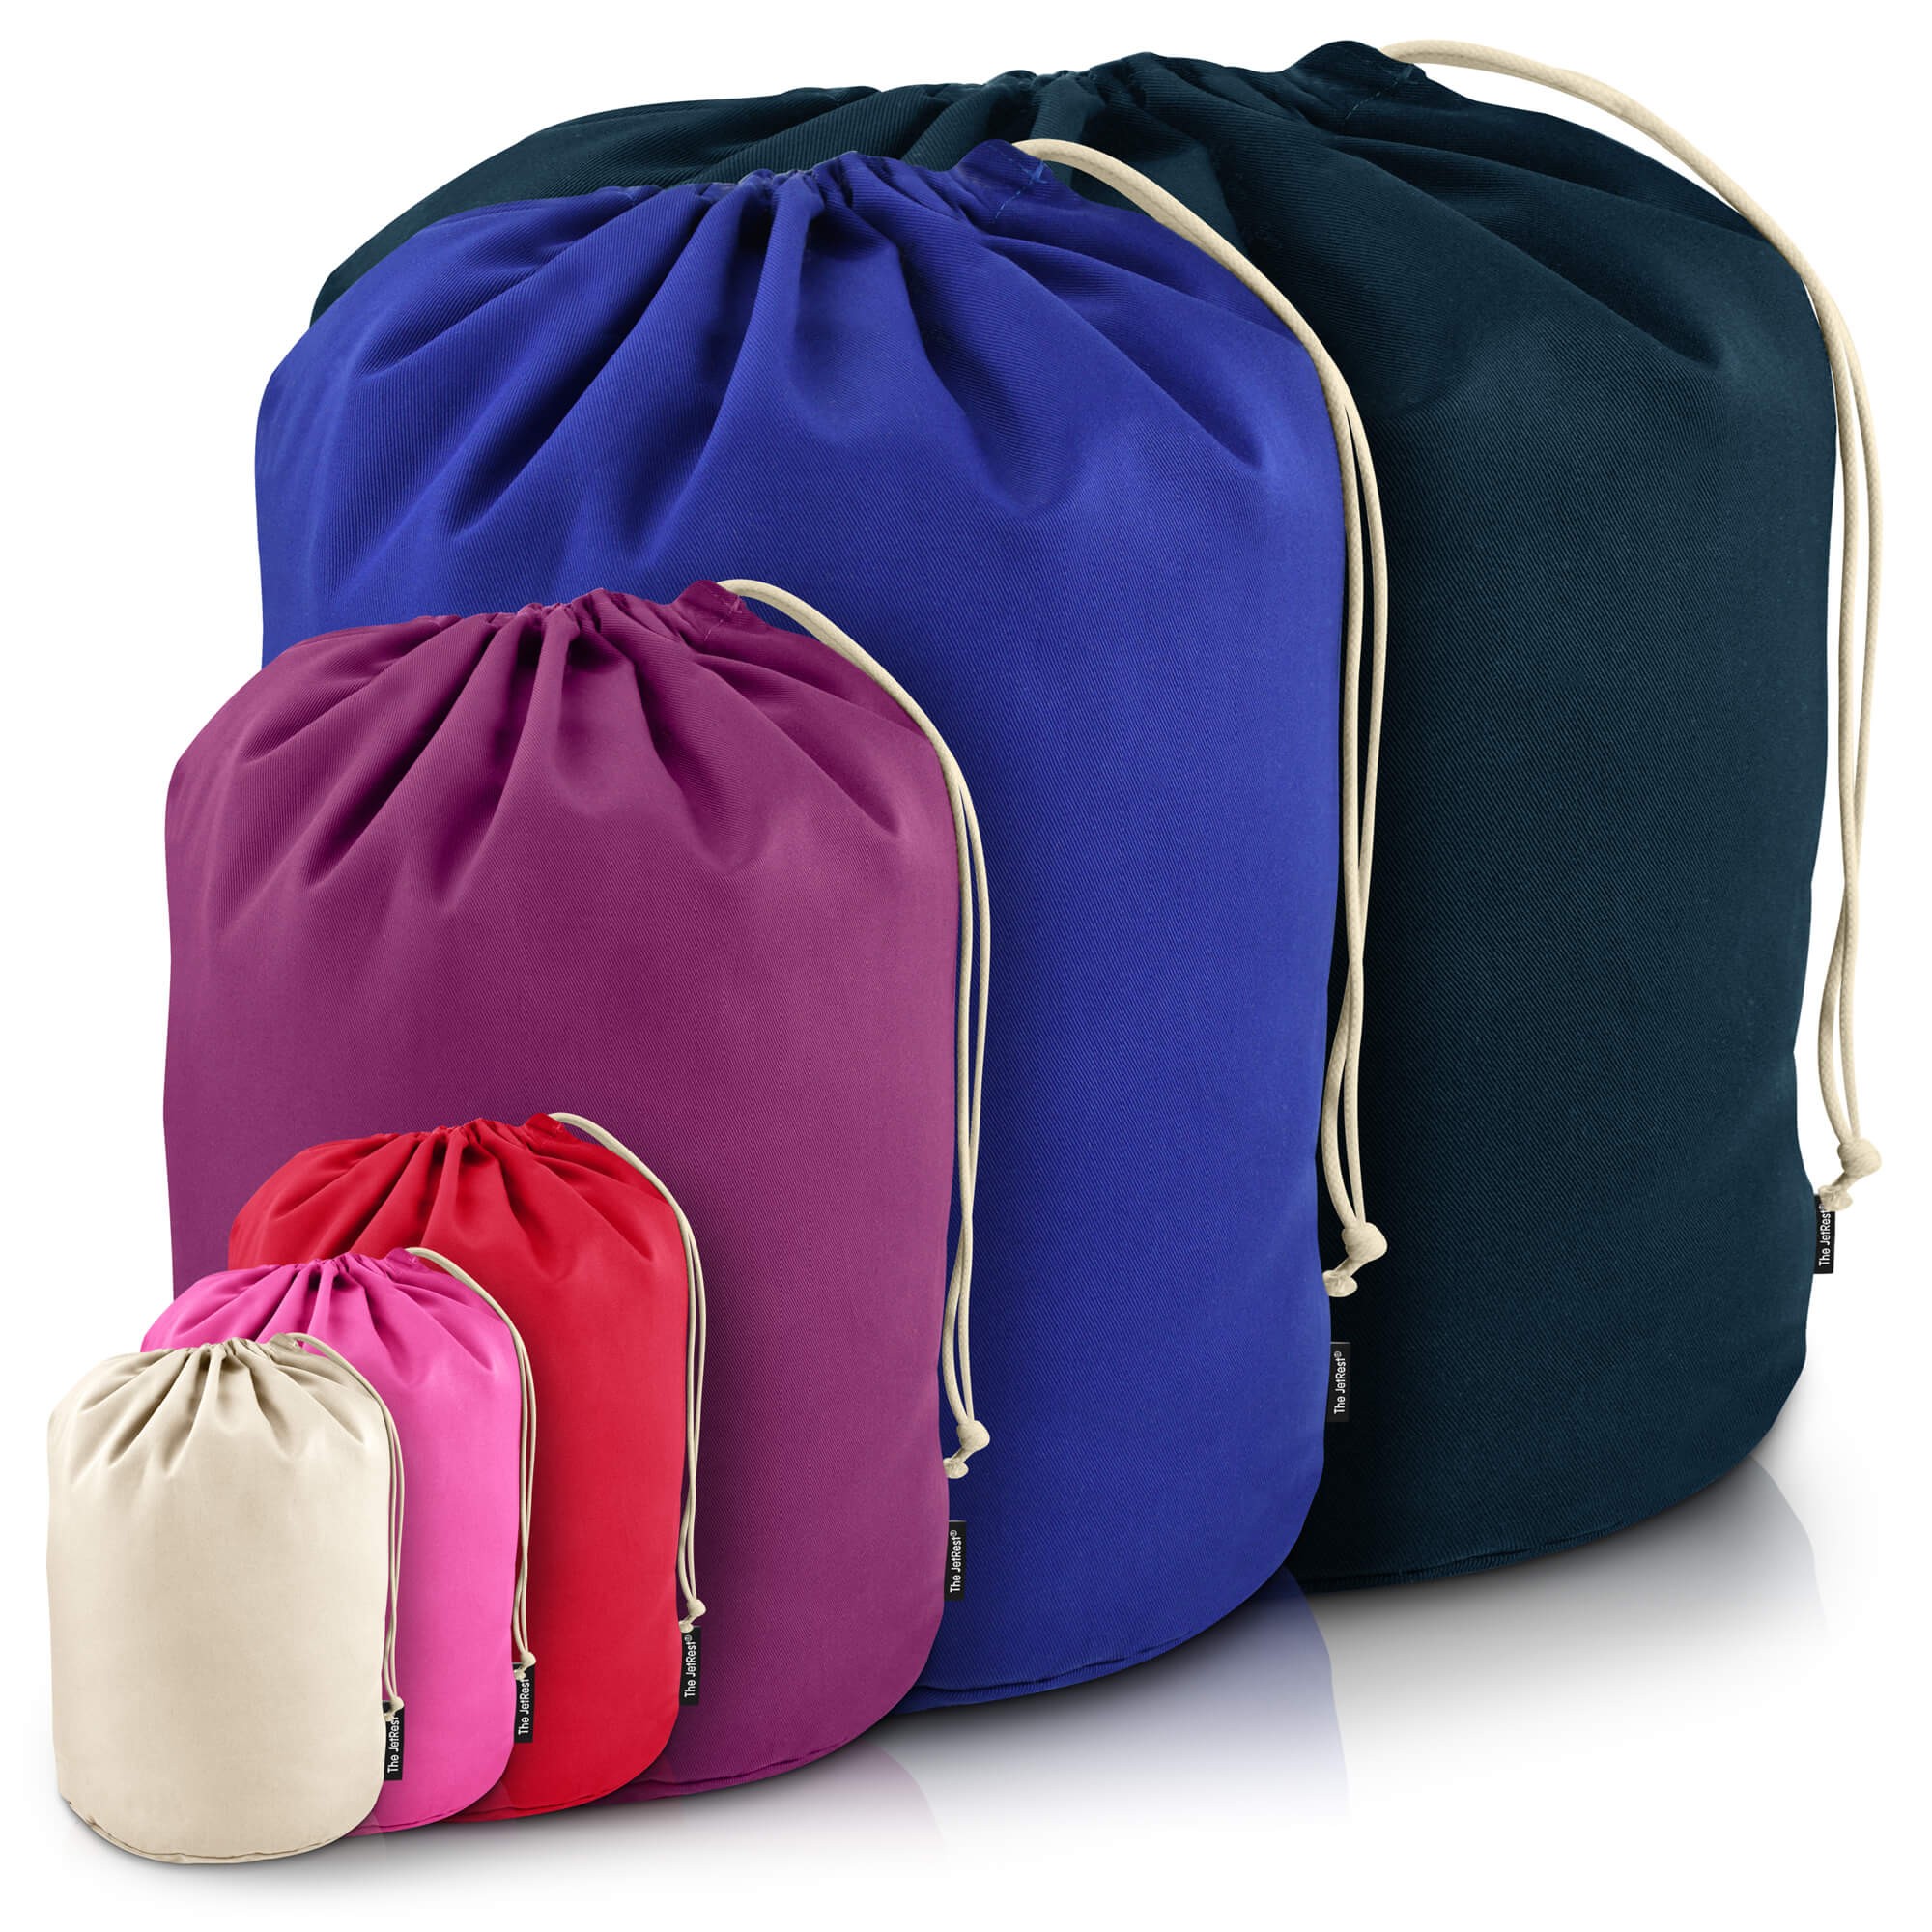 15.7 X 18.1 Hotel Travel Laundry Bags - Brilliant Promos - Be Brilliant!